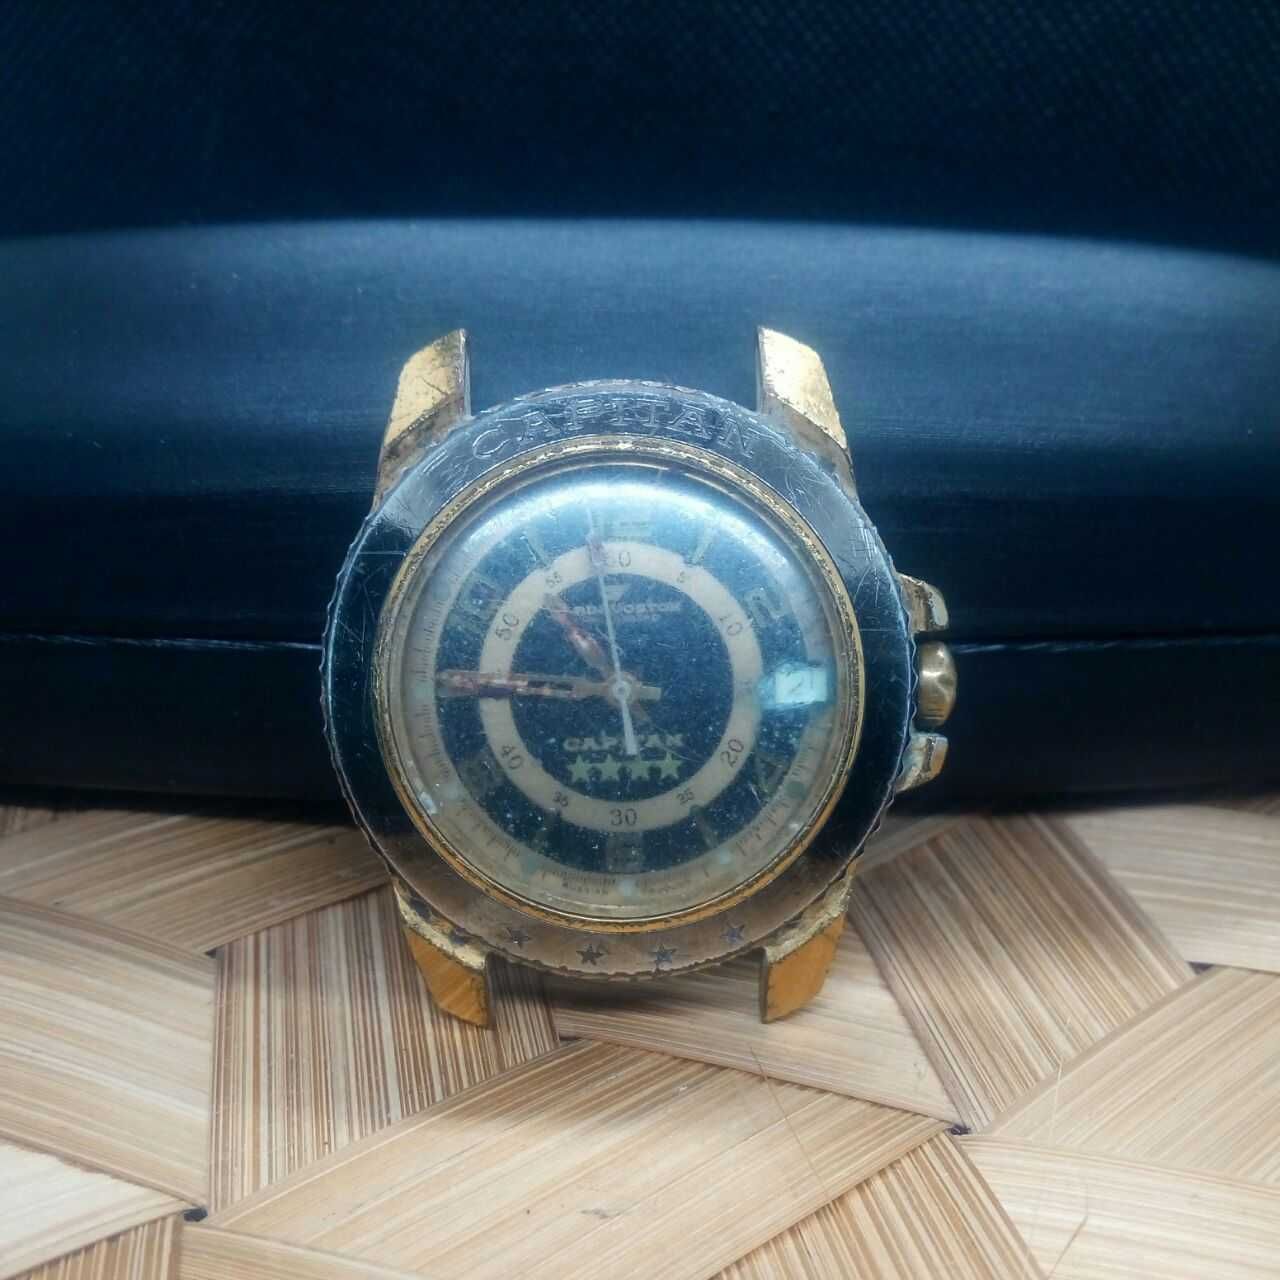 Часы Cardi Vostok Capitan